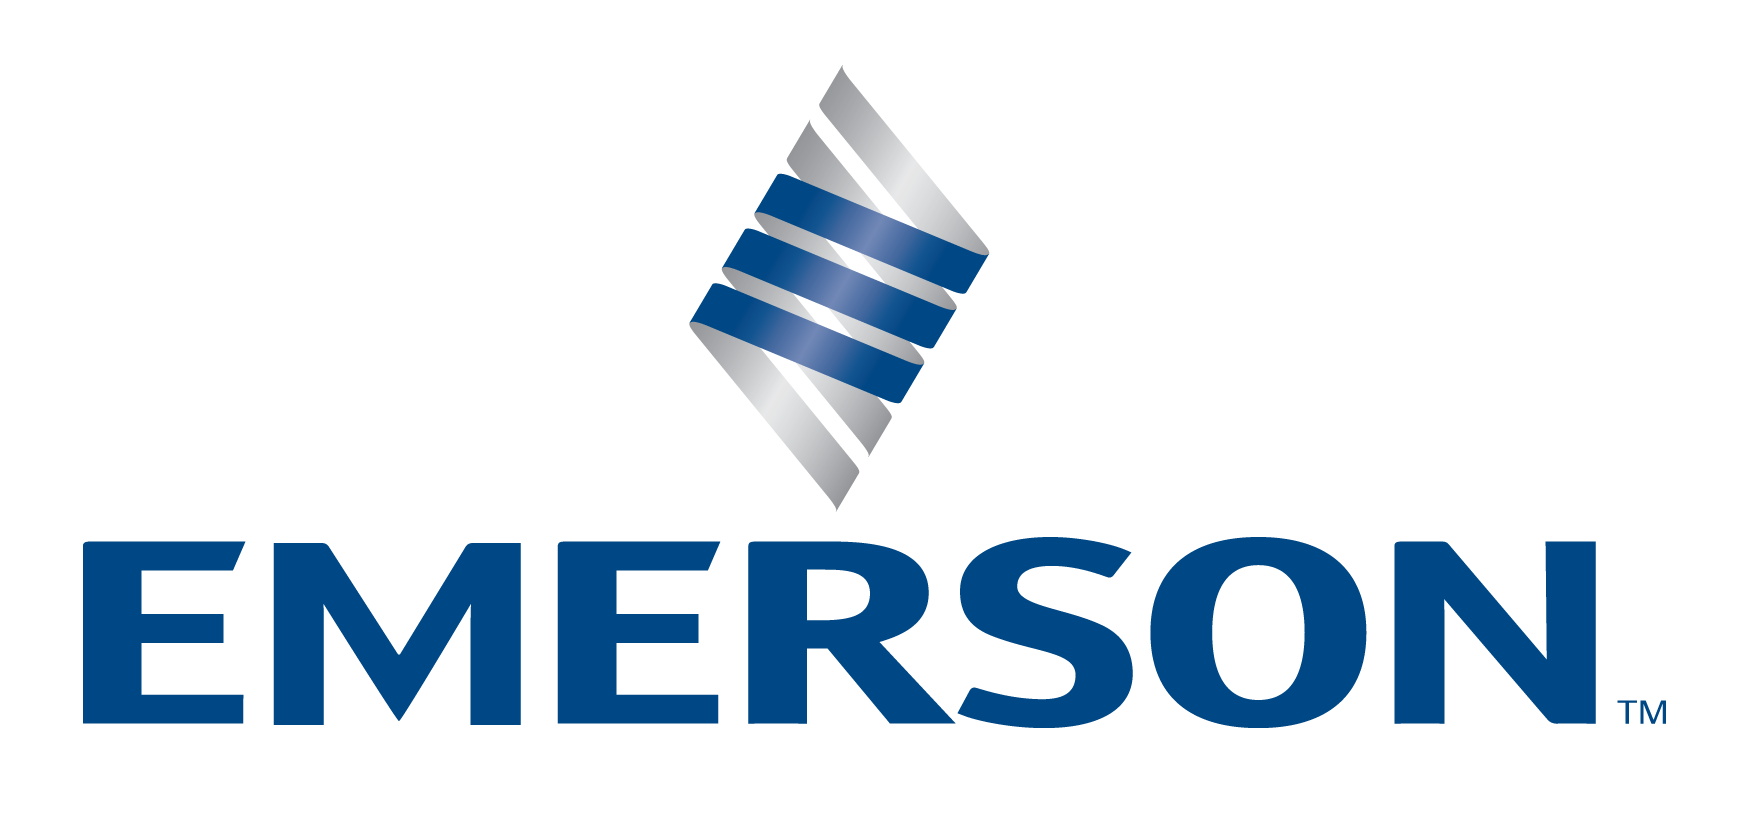 Emerson Electric Co logo